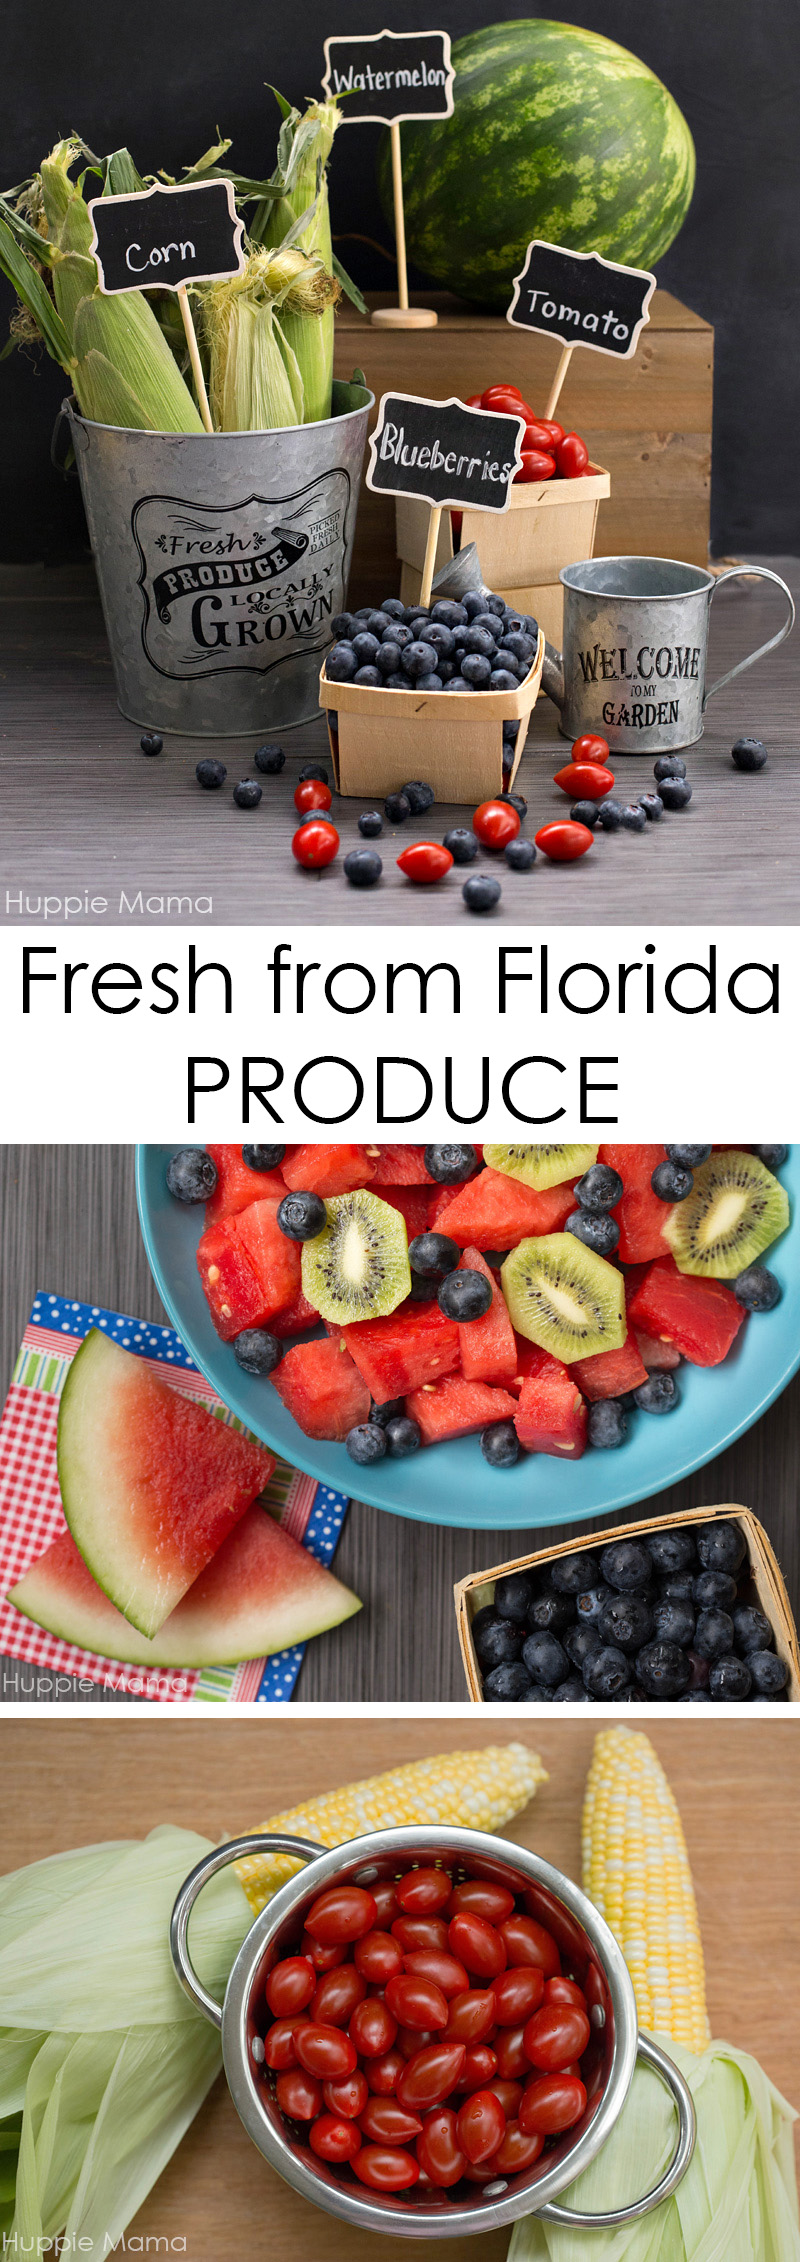 Fresh from Florida produce